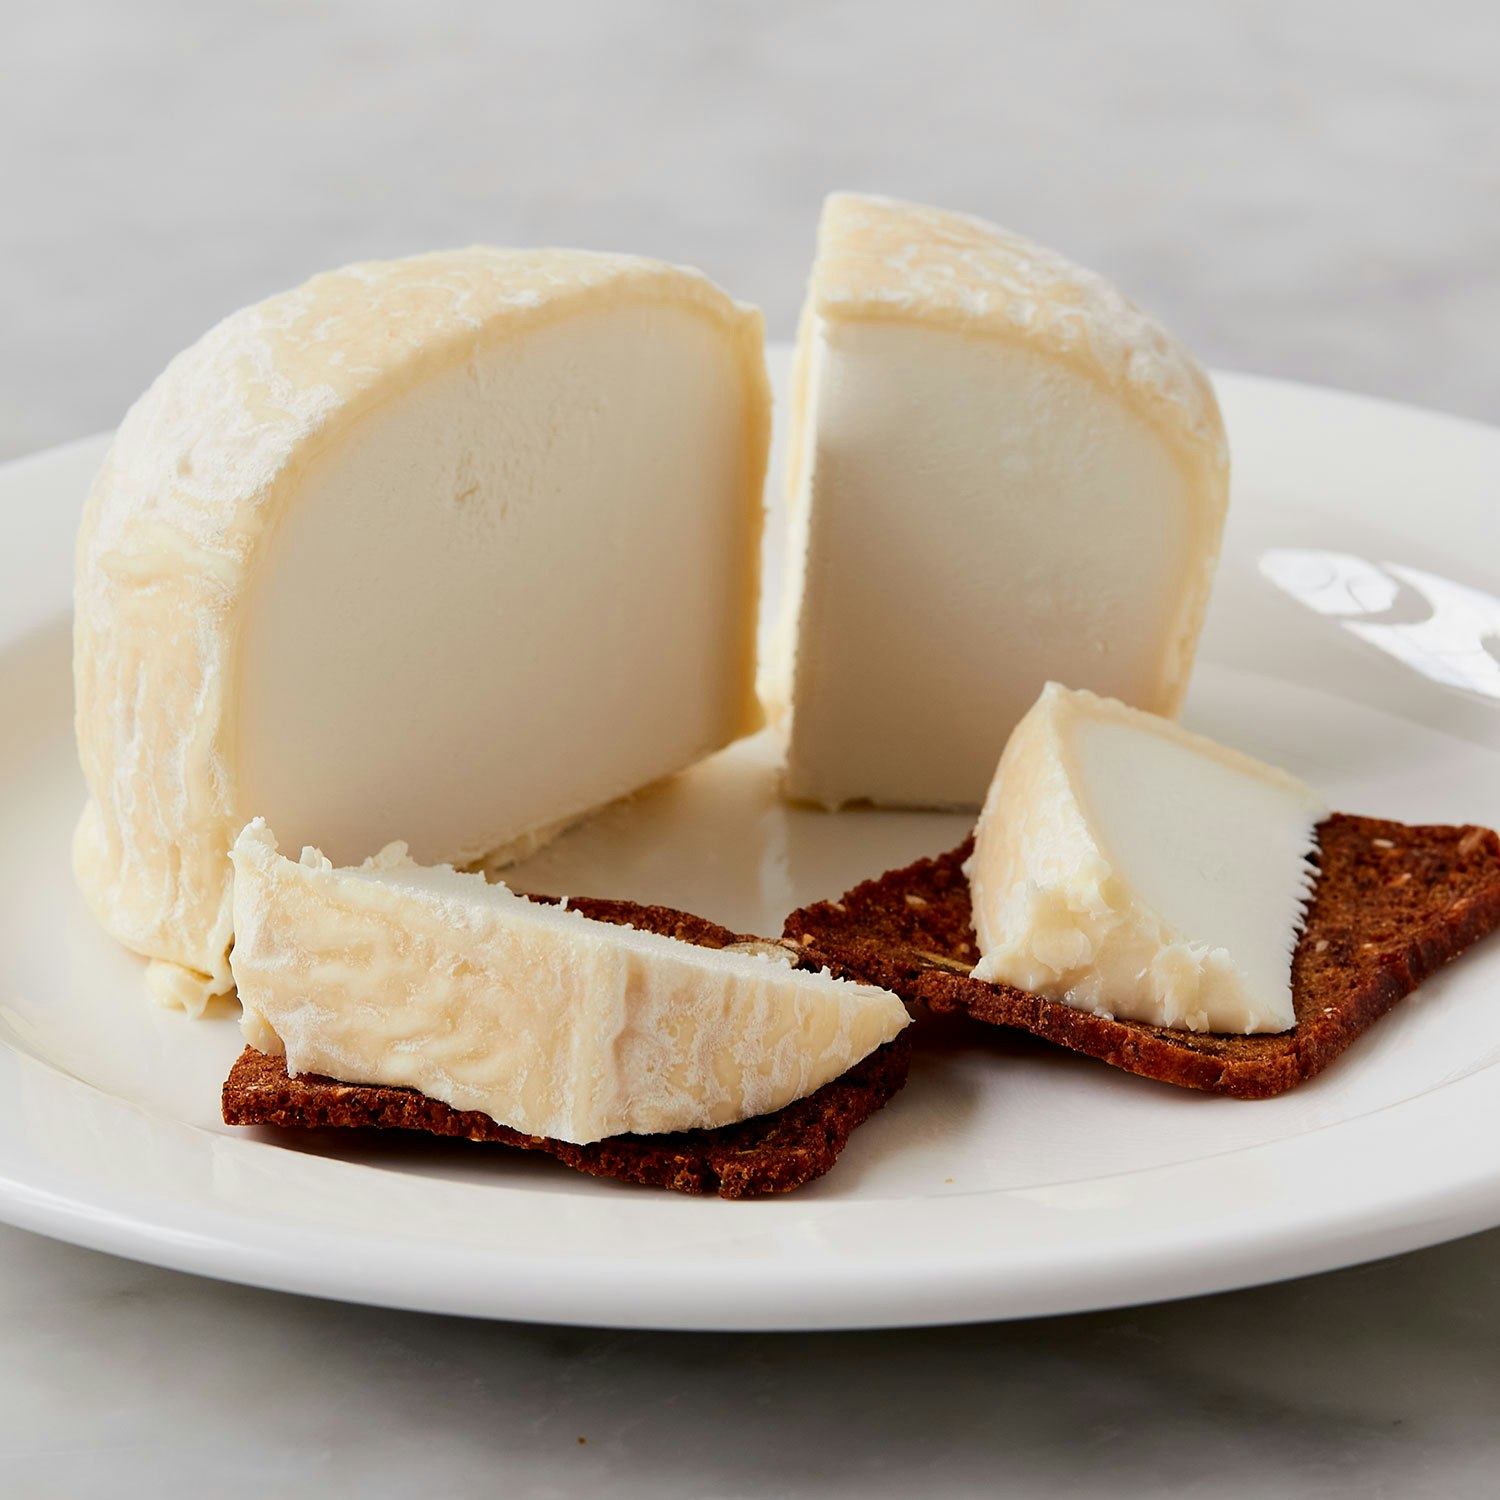 vermont creamery coupole cheese